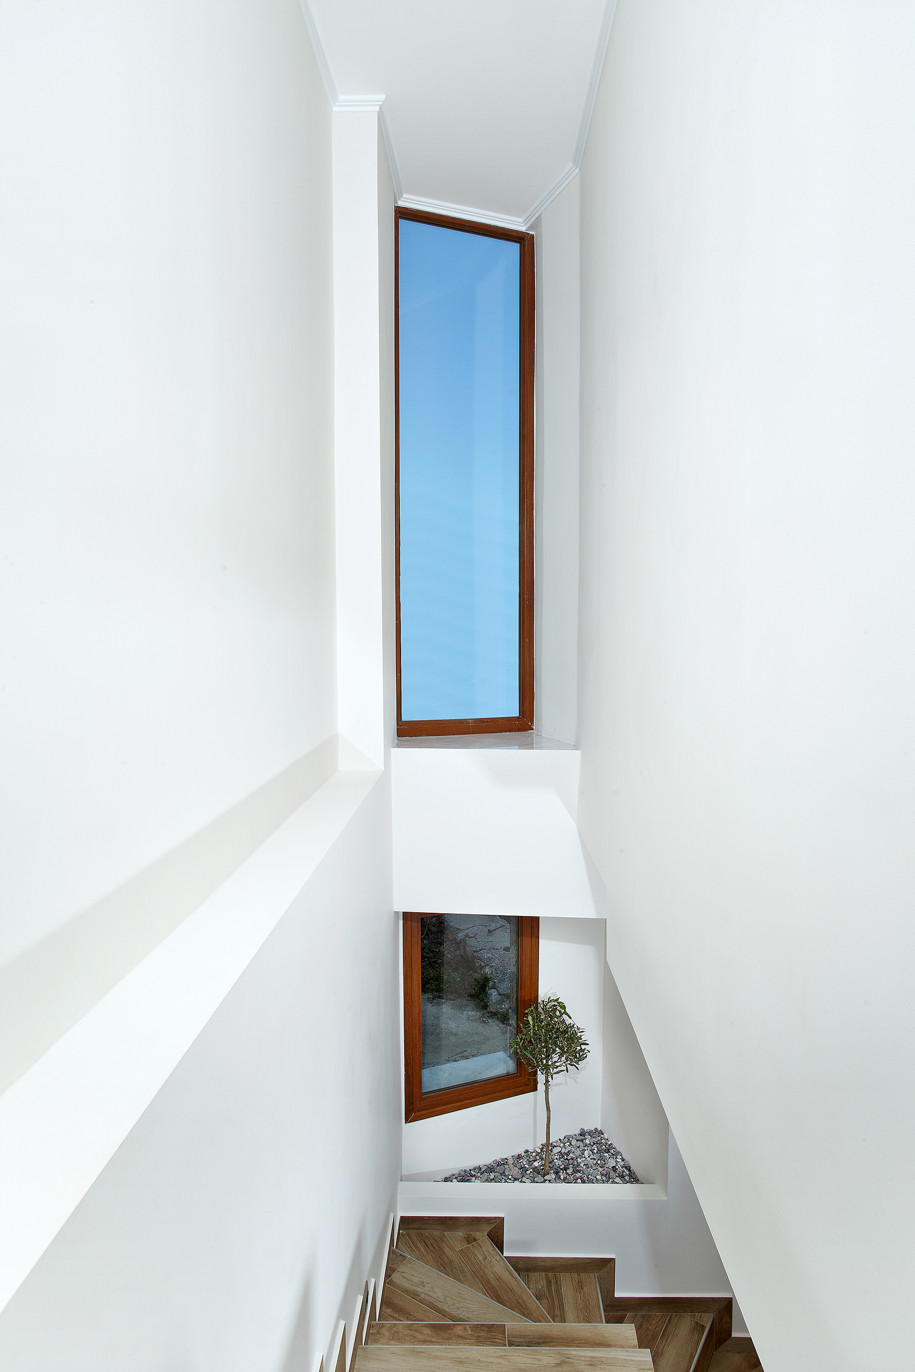 Amalgama Architects, Αγγελική Αυδή, Ελίνα Μήτση, Χίος, εξοχική κατοικία, summer house, 2019